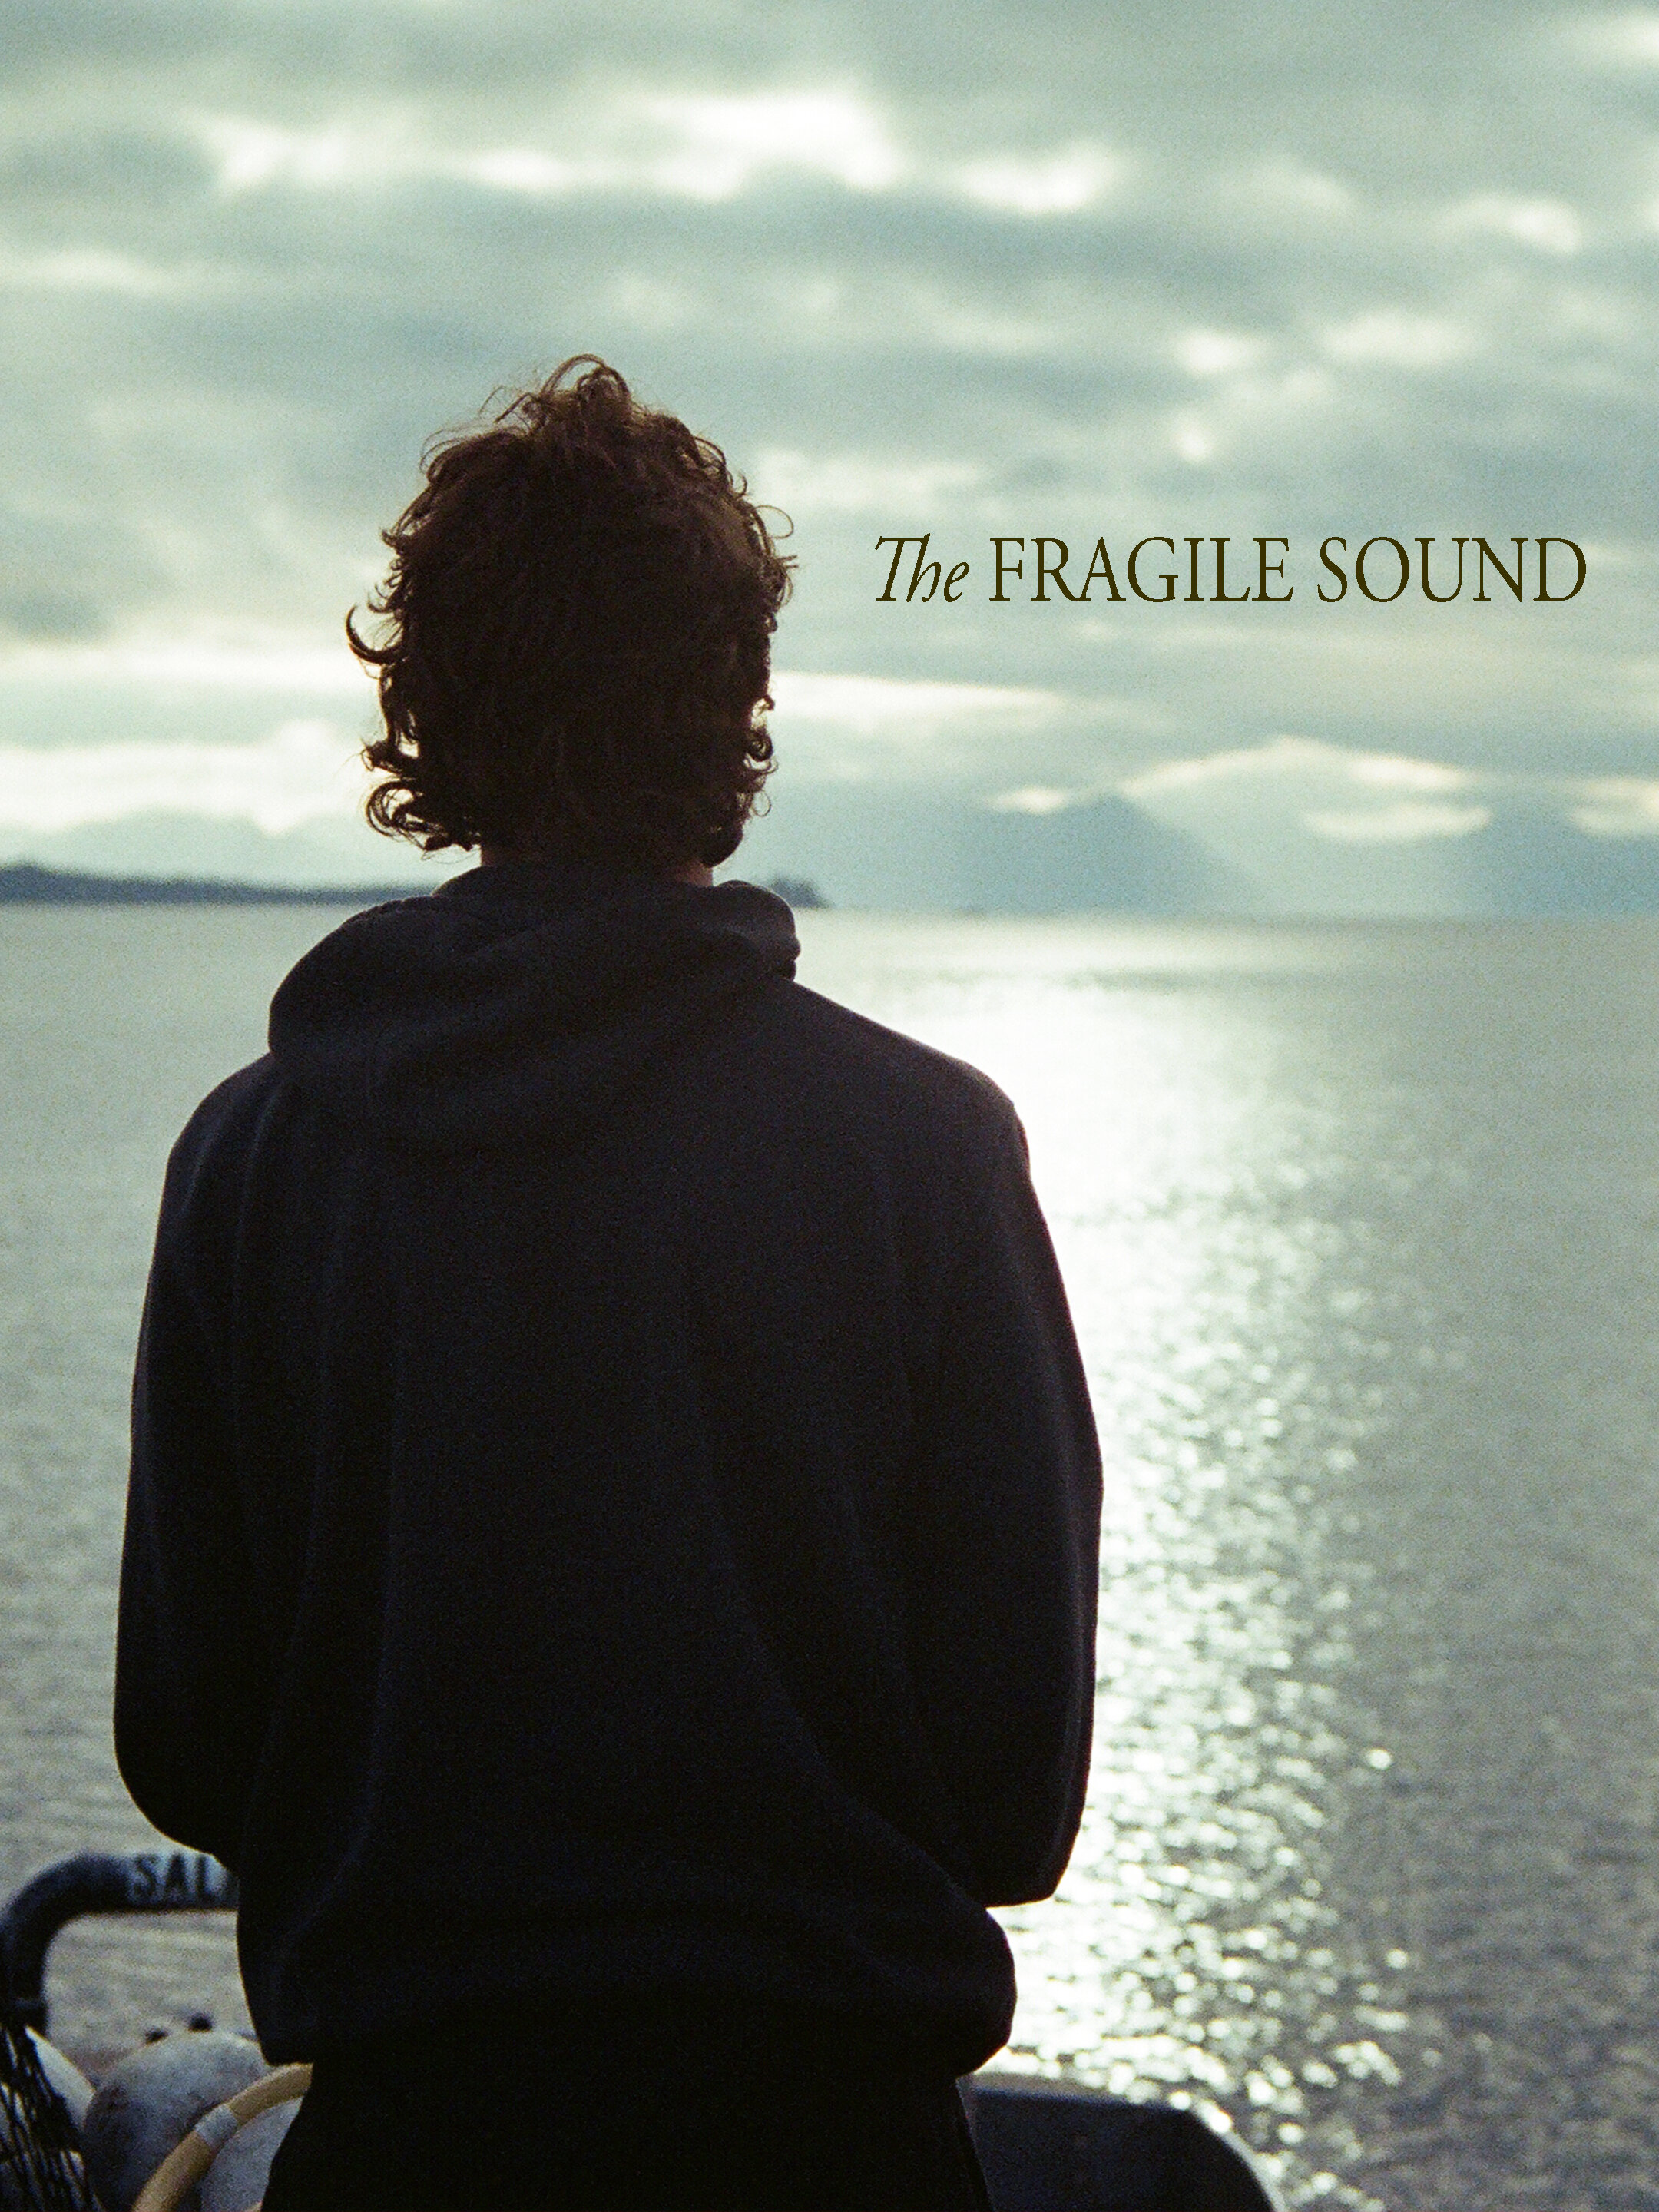 The Fragile Sound film